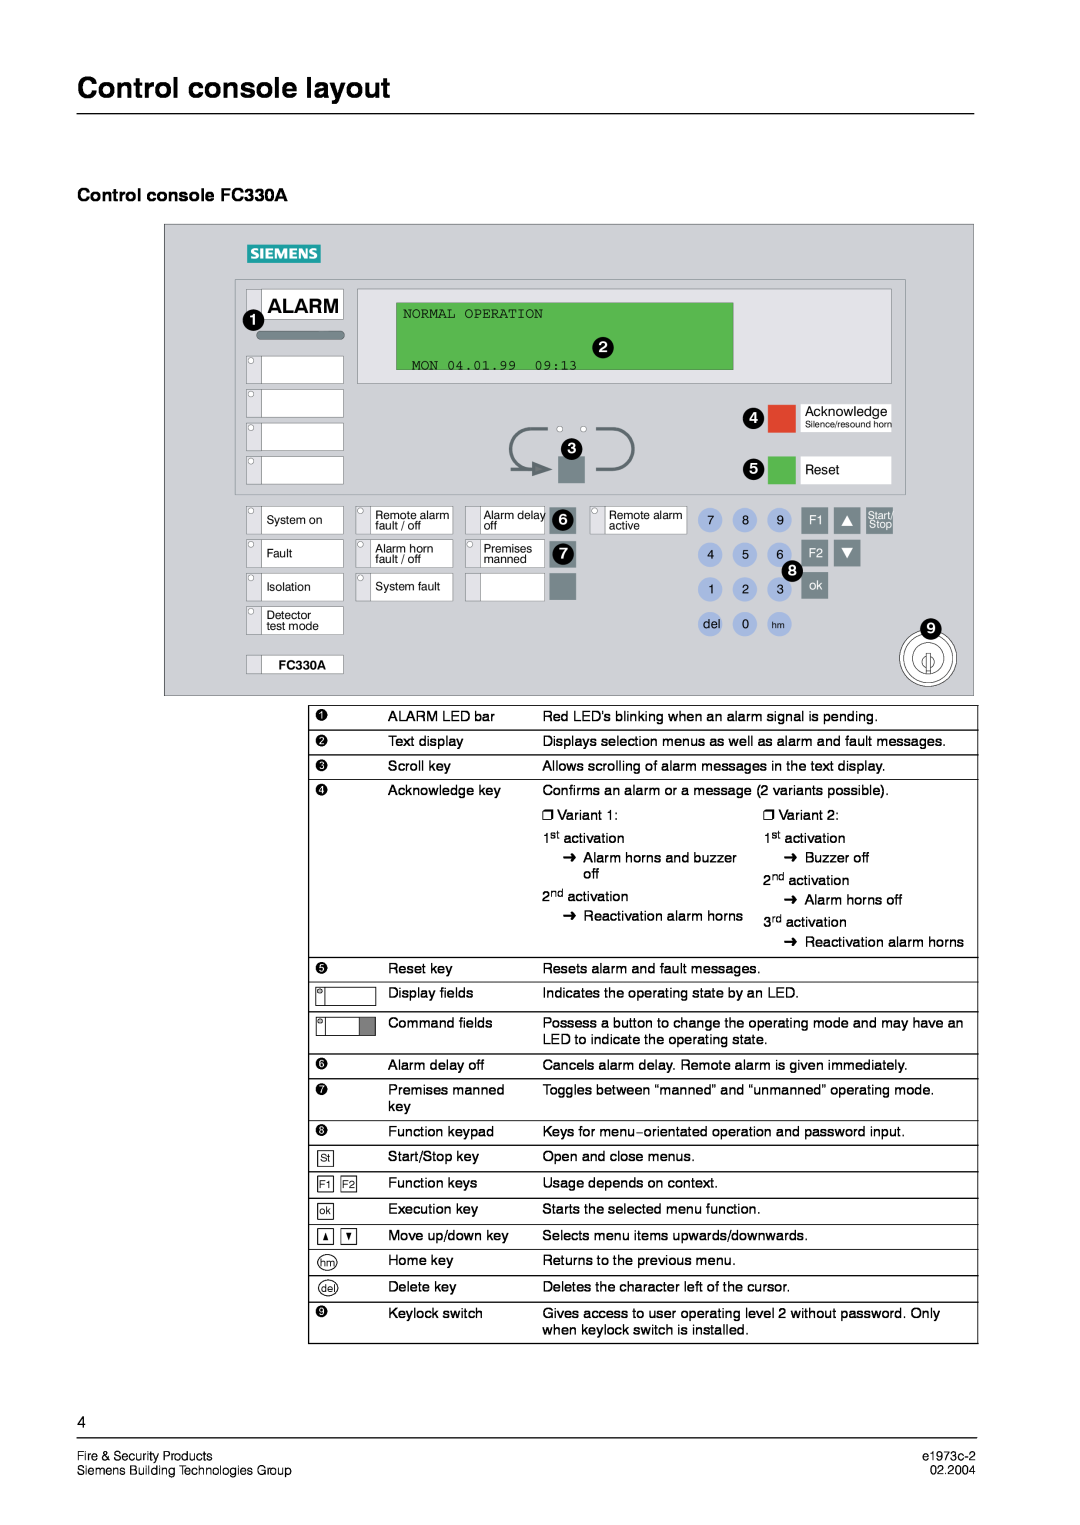 Siemens manual Control console layout, Alarm, Control console FC330A 